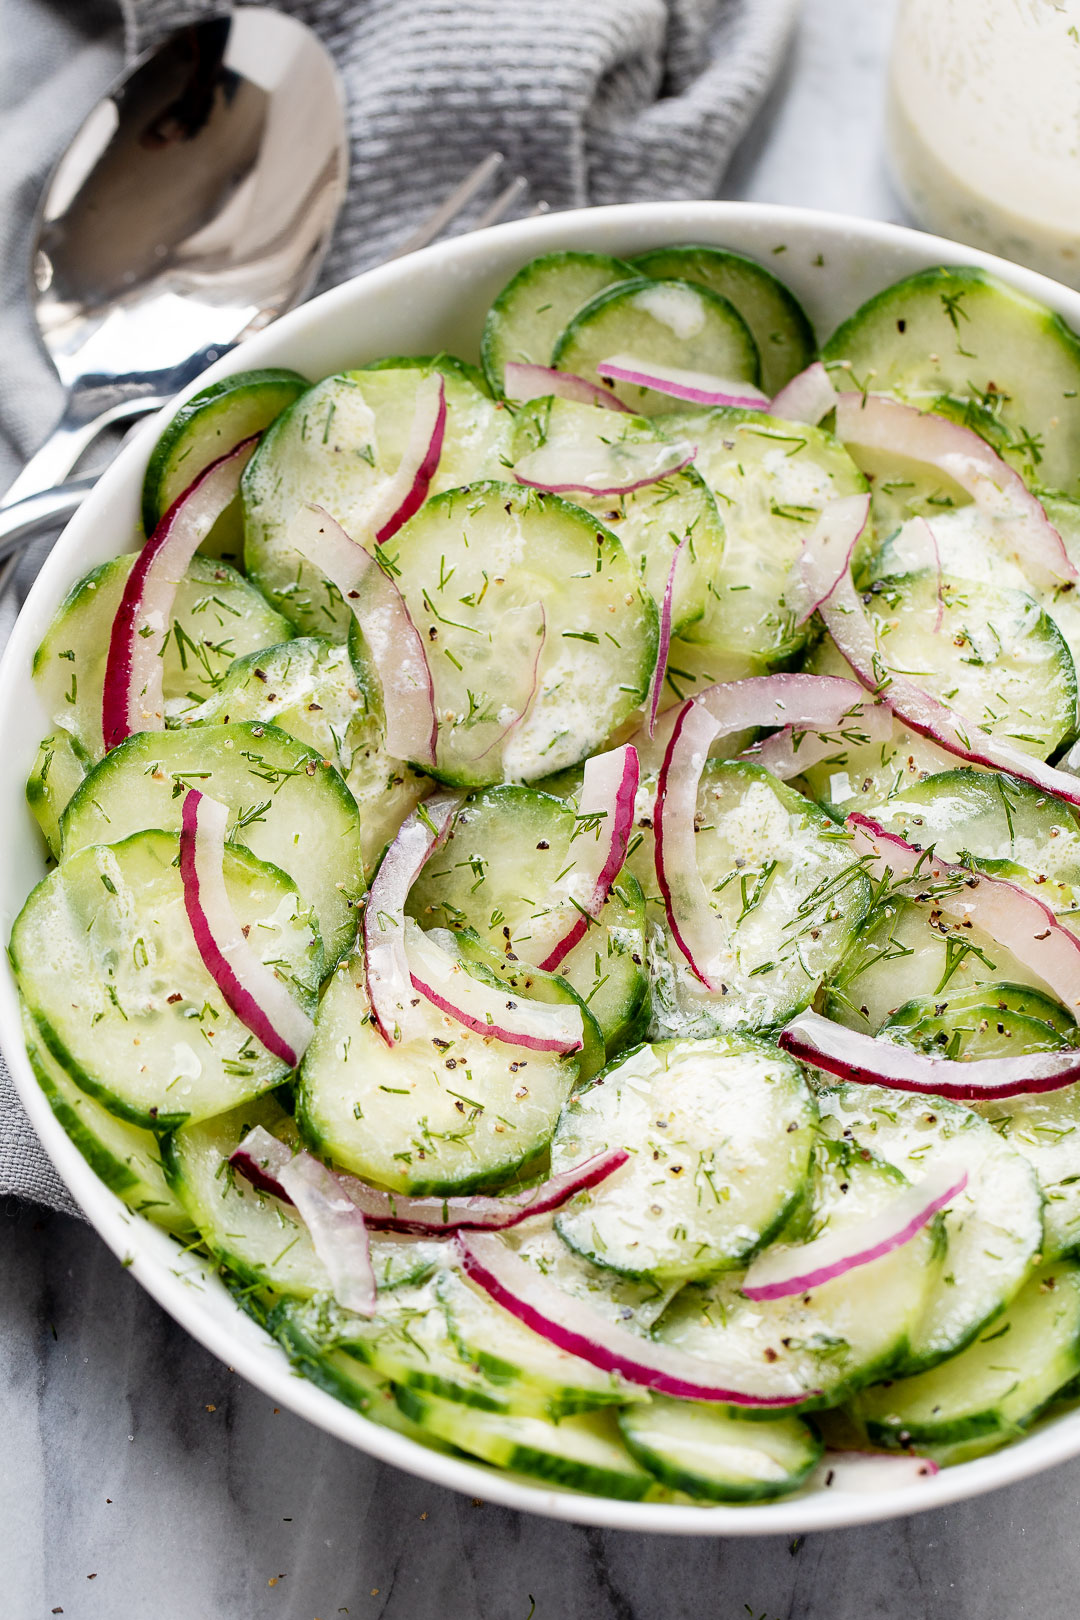 Marinated Cucumber Salad Recipe with Creamy Dill Sauce – Cucumber Salad